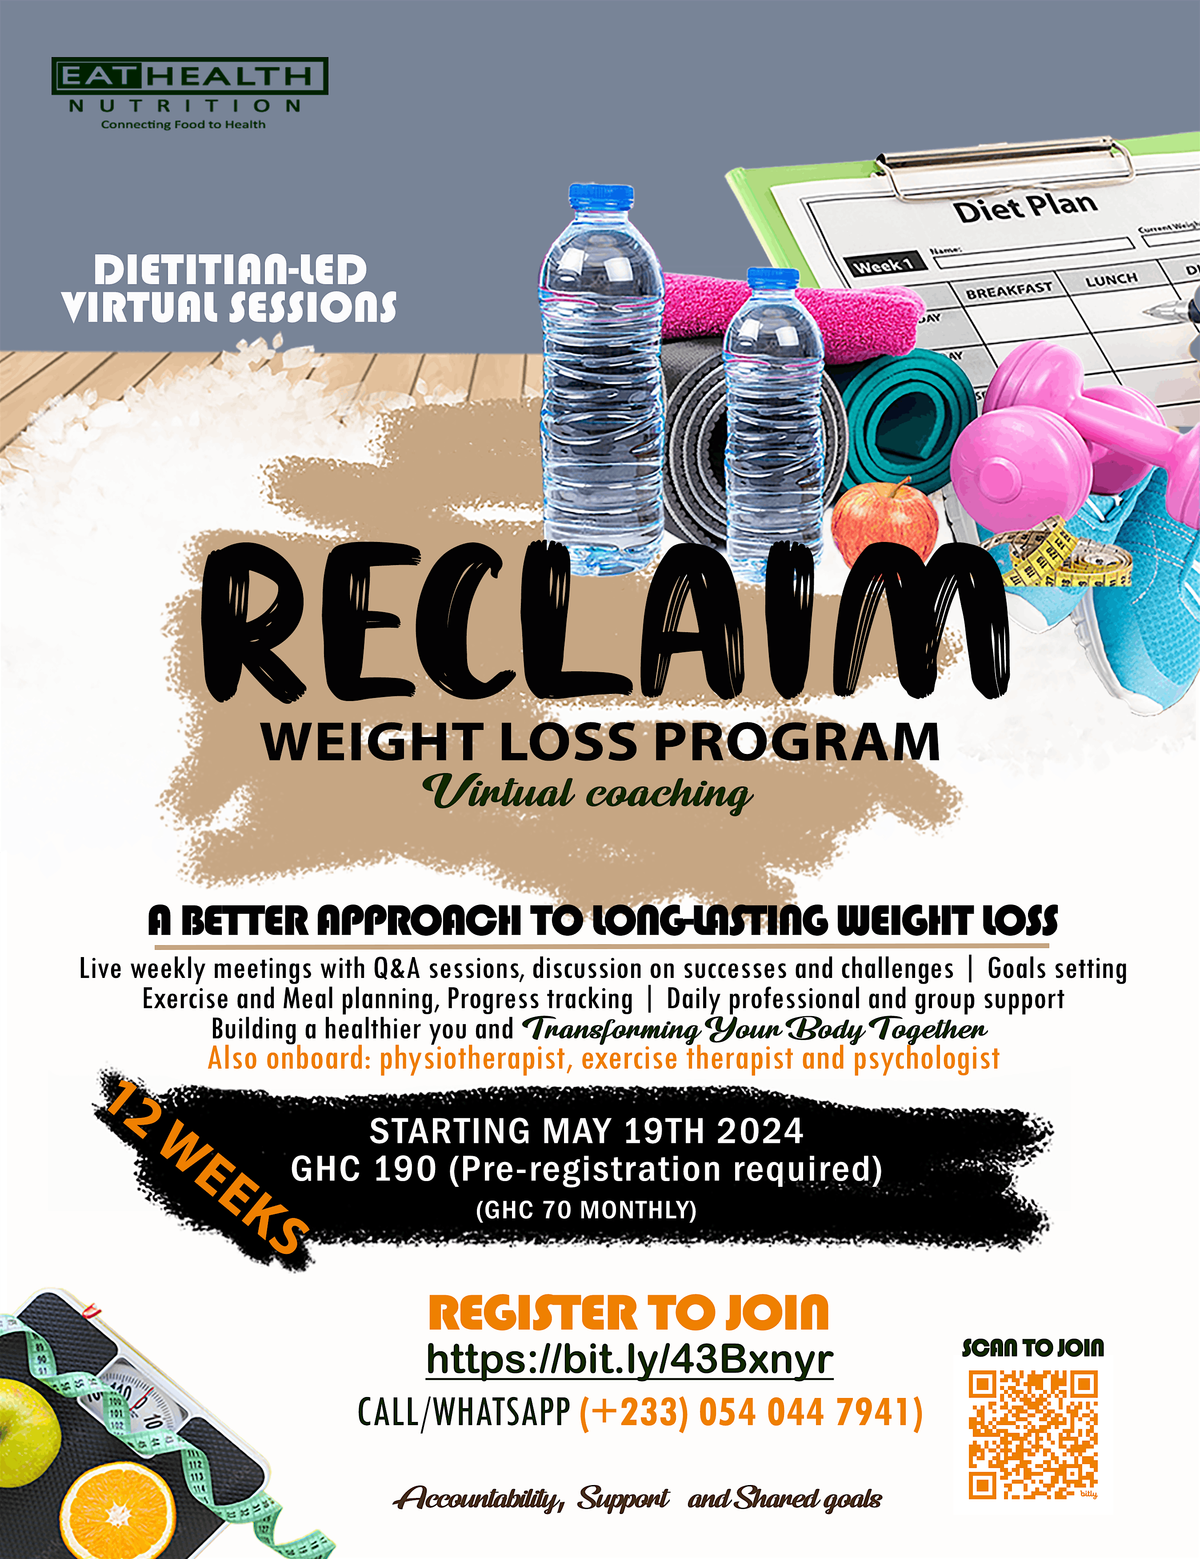 Reclaim Weight Loss Program